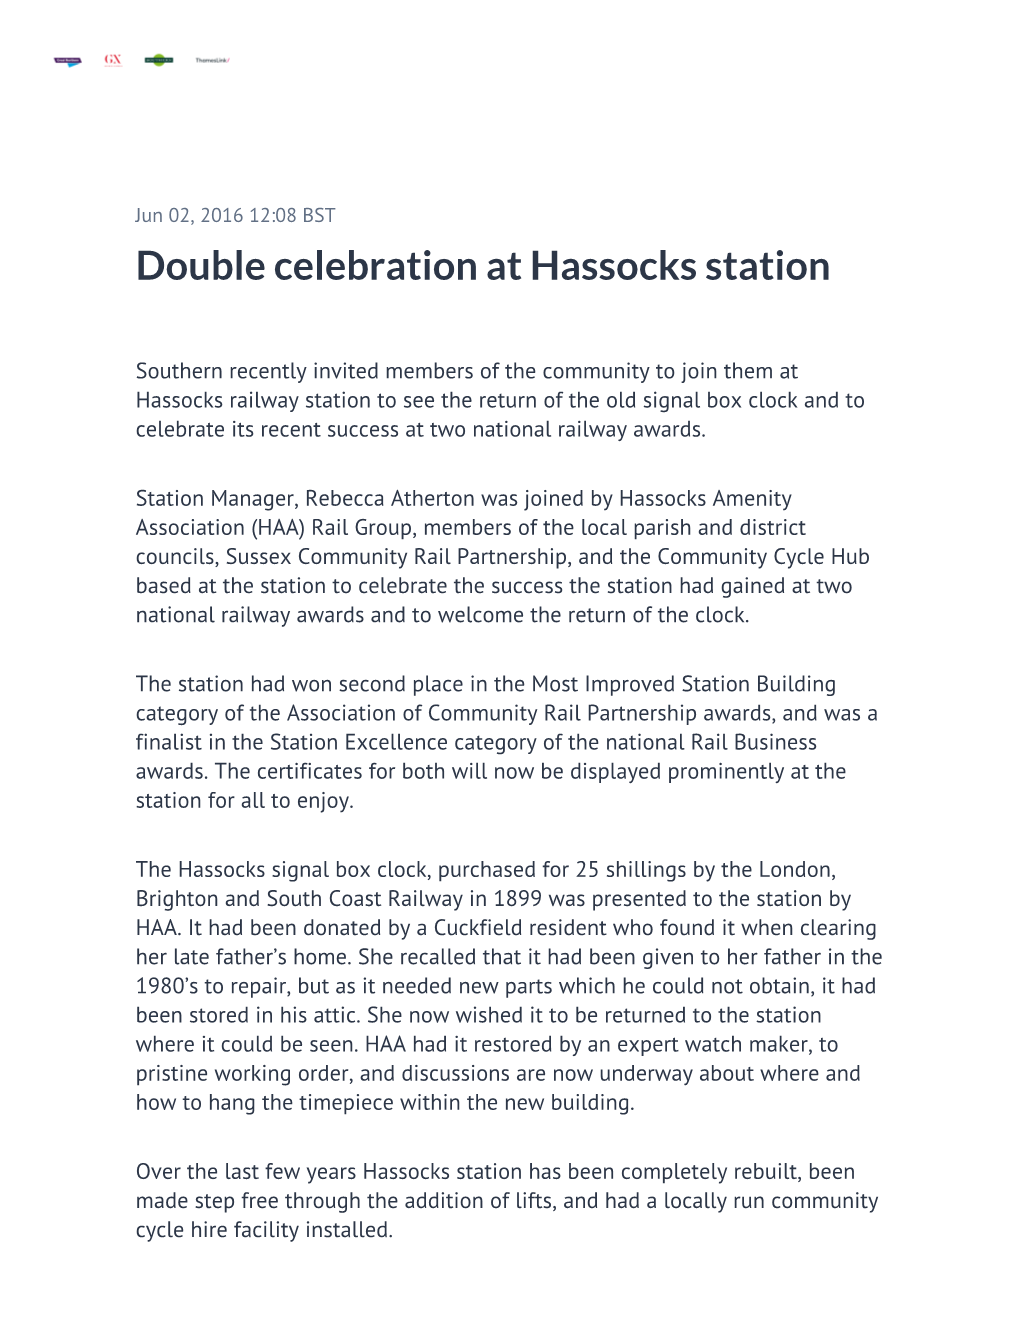 Double Celebration at Hassocks Station